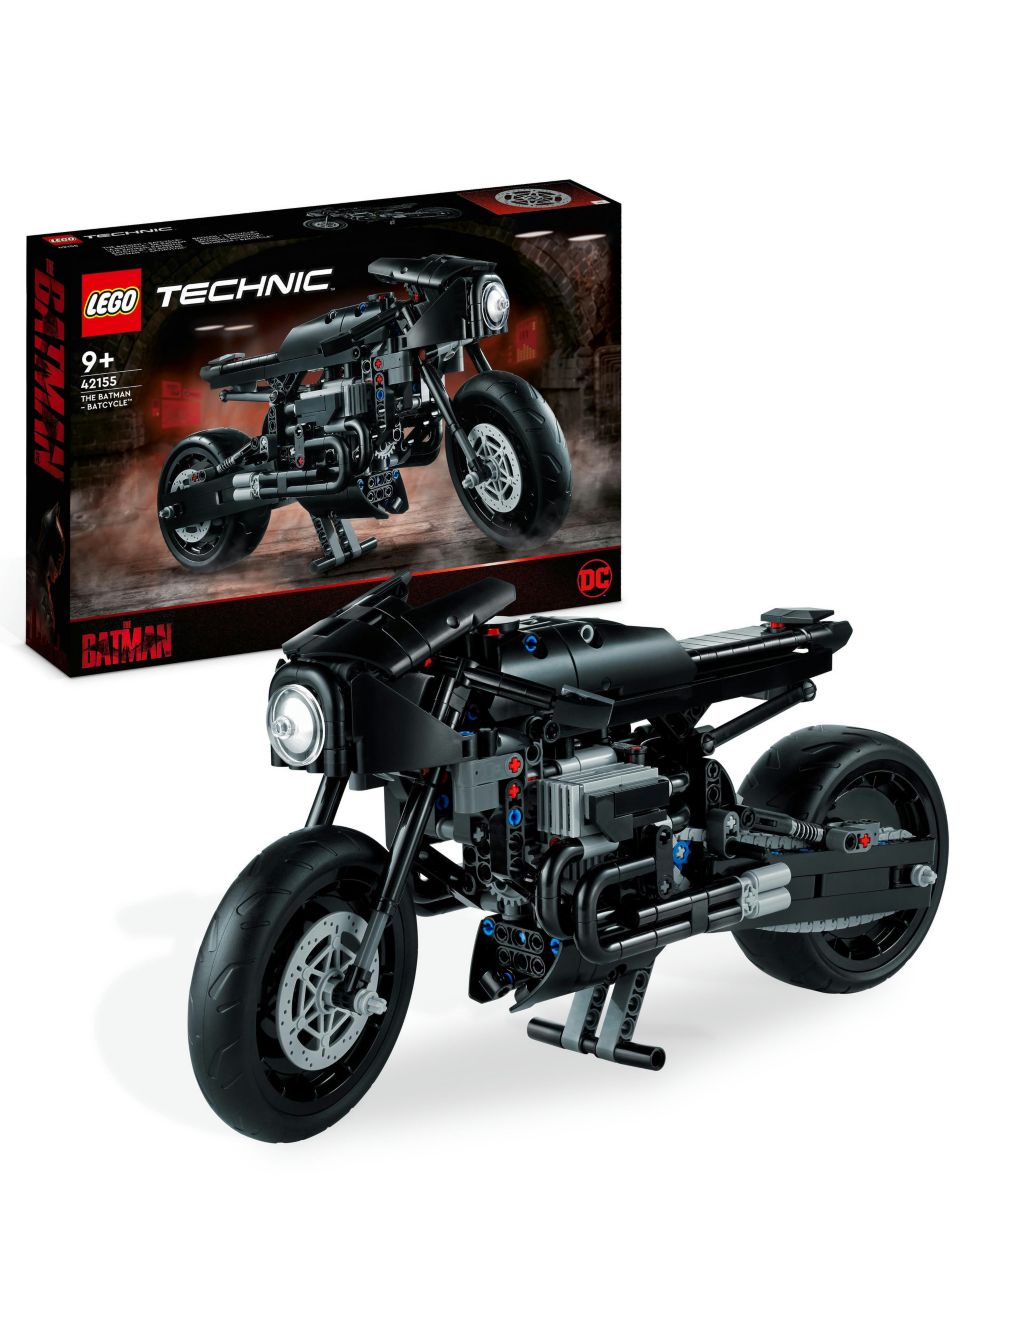 LEGO Technic THE BATMAN – BATCYCLE Bike Set 42155 (9+ Yrs)